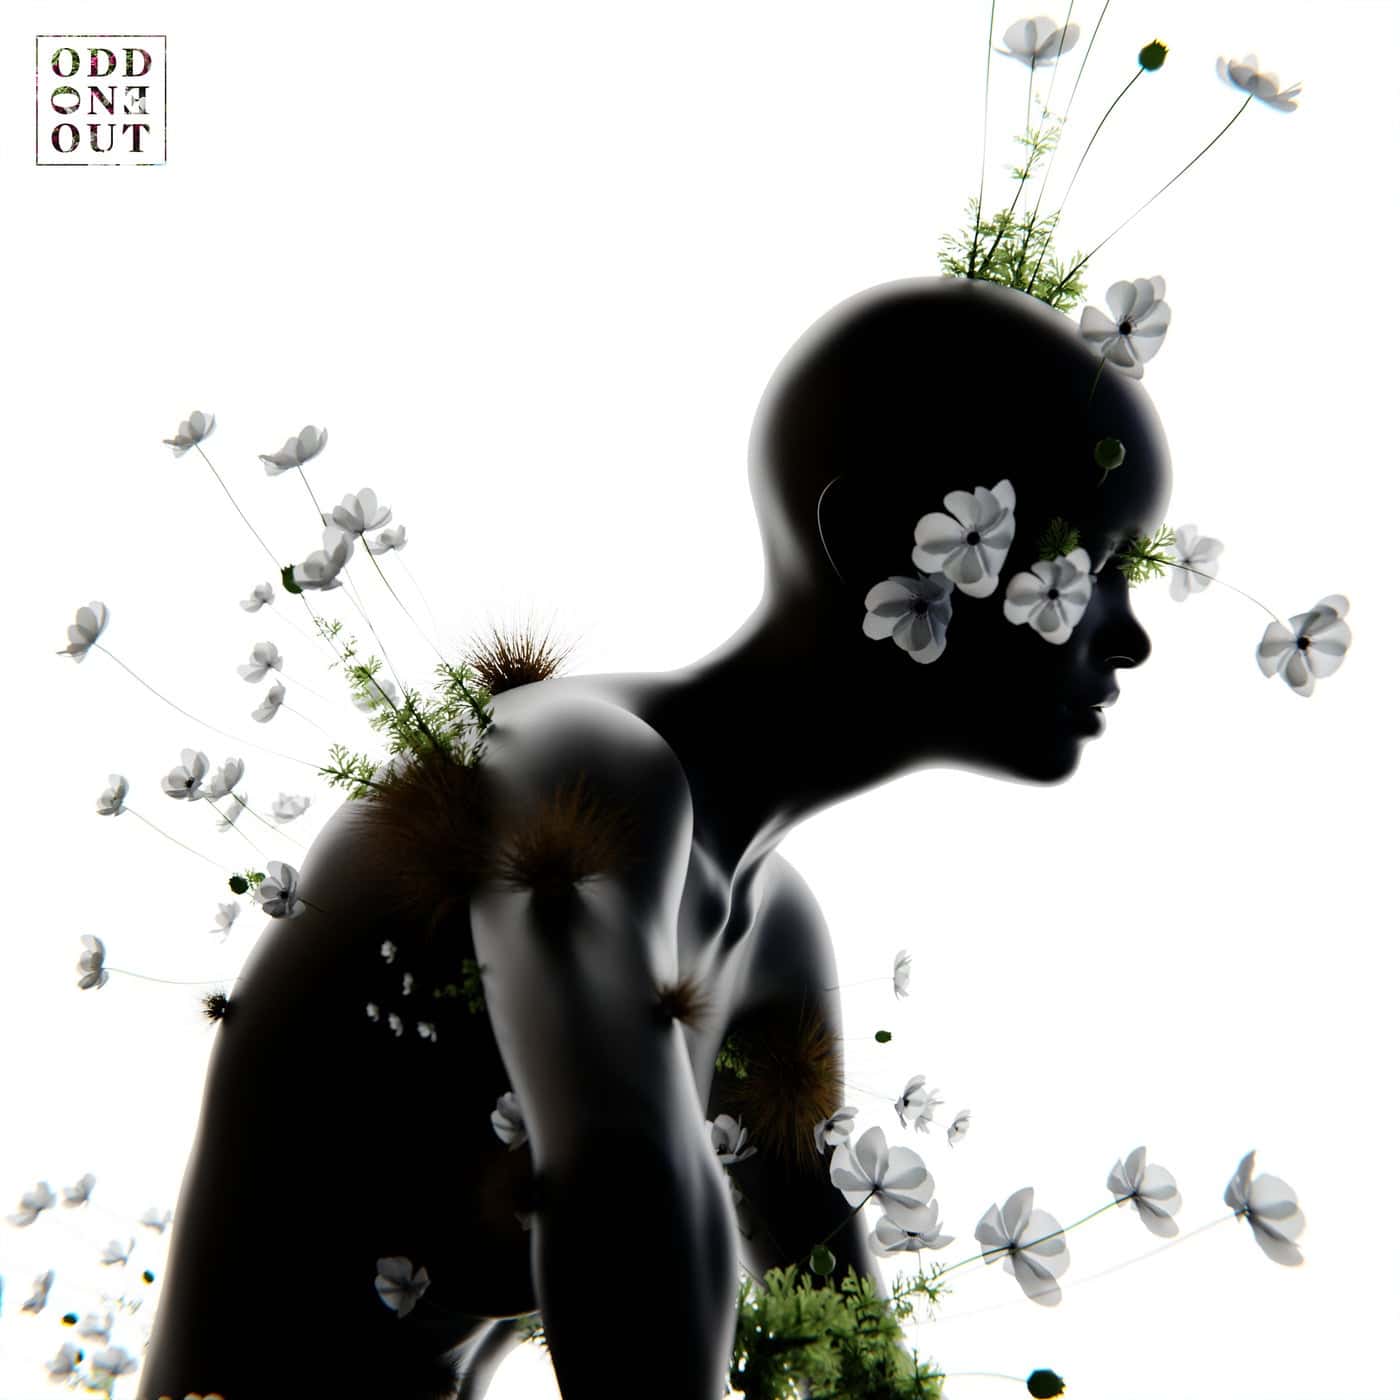 image cover: Booka Shade, Yotto, SOHMI - Encounters (SOHMI Fantasy Extended Remix) / Odd One Out